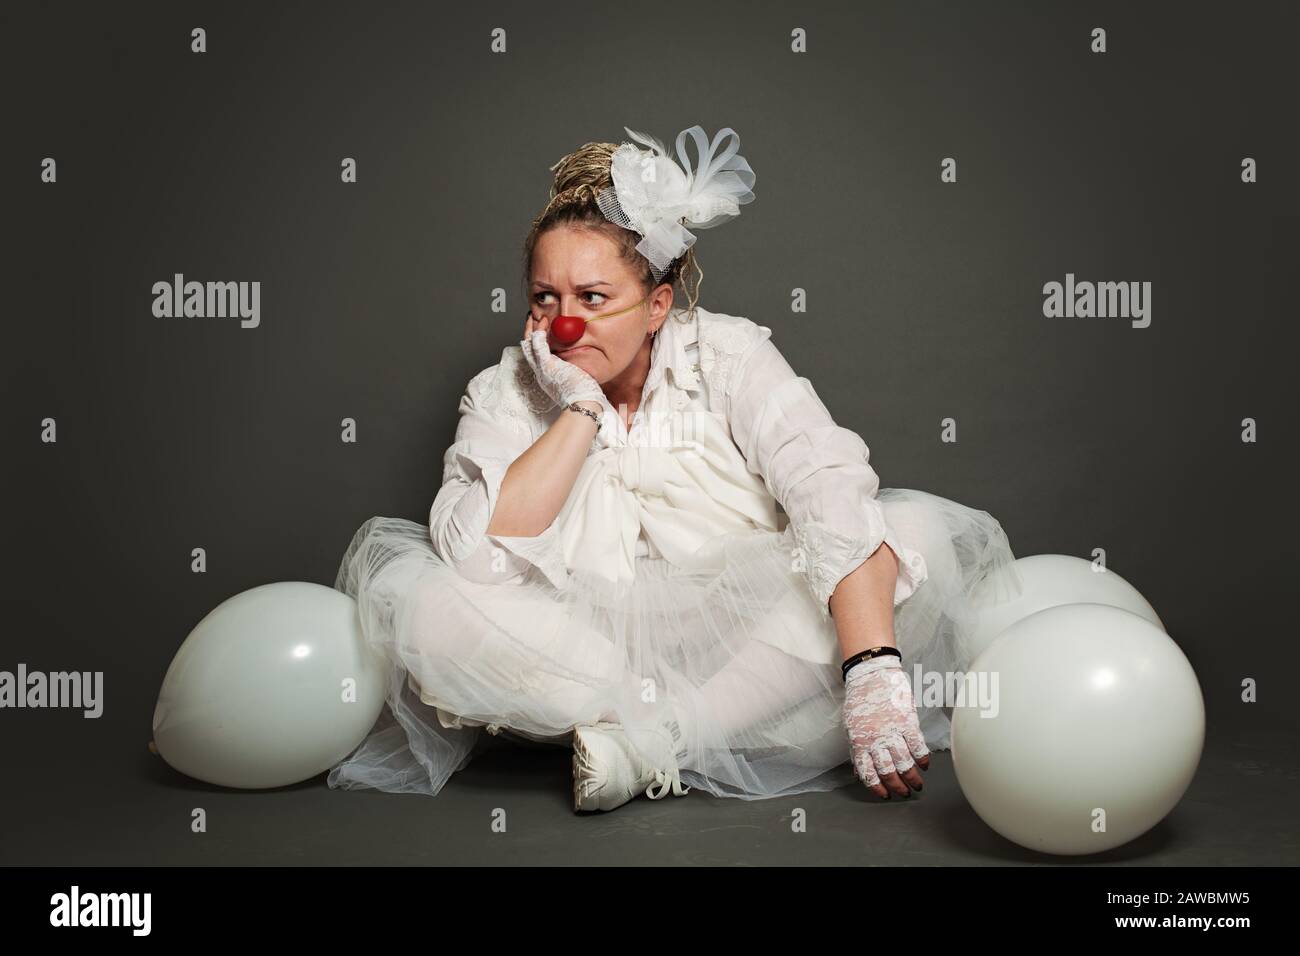 Sad thinkinking woman clown portrait Stock Photo